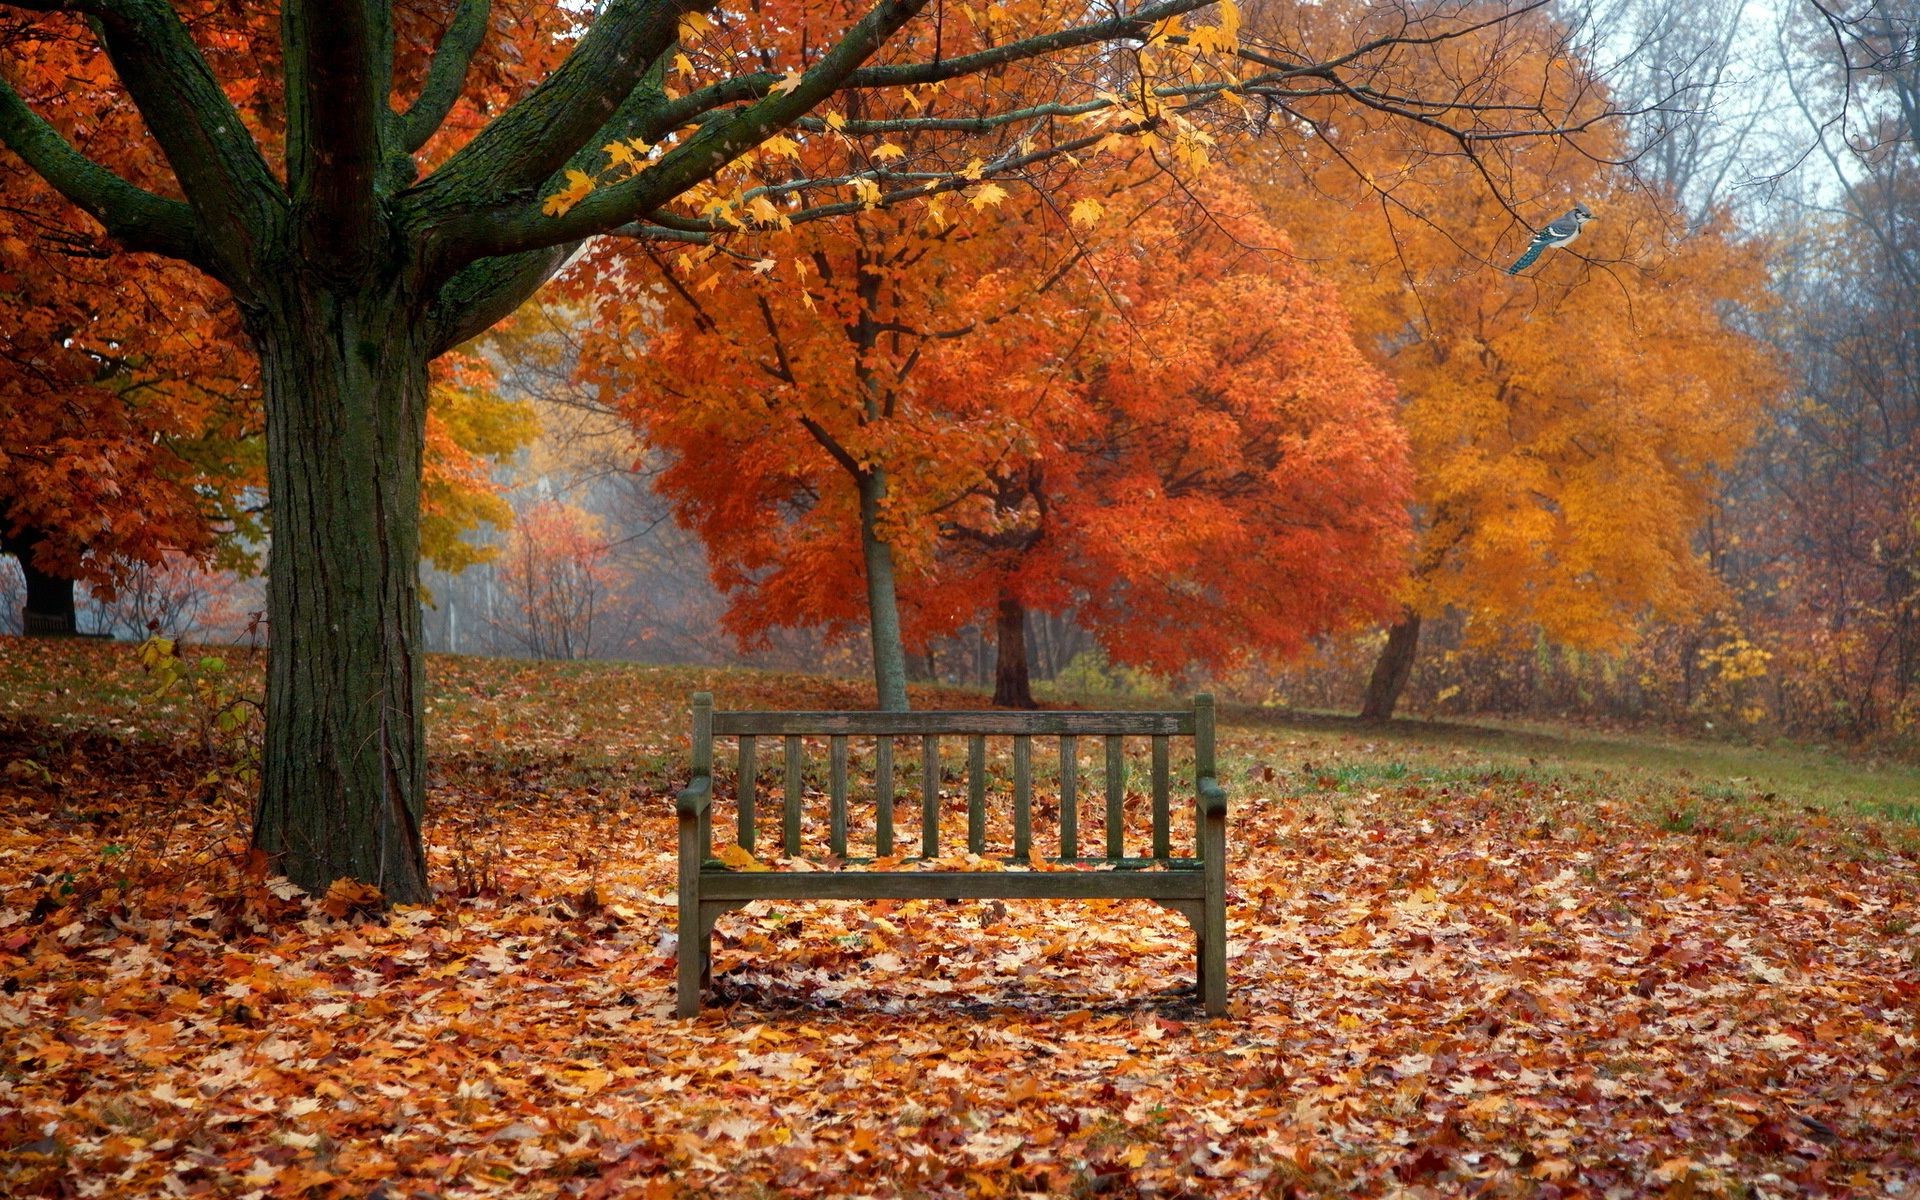 autumn fall leaf tree maple wood season park landscape bench change fog nature dawn branch mist gold guidance scenic